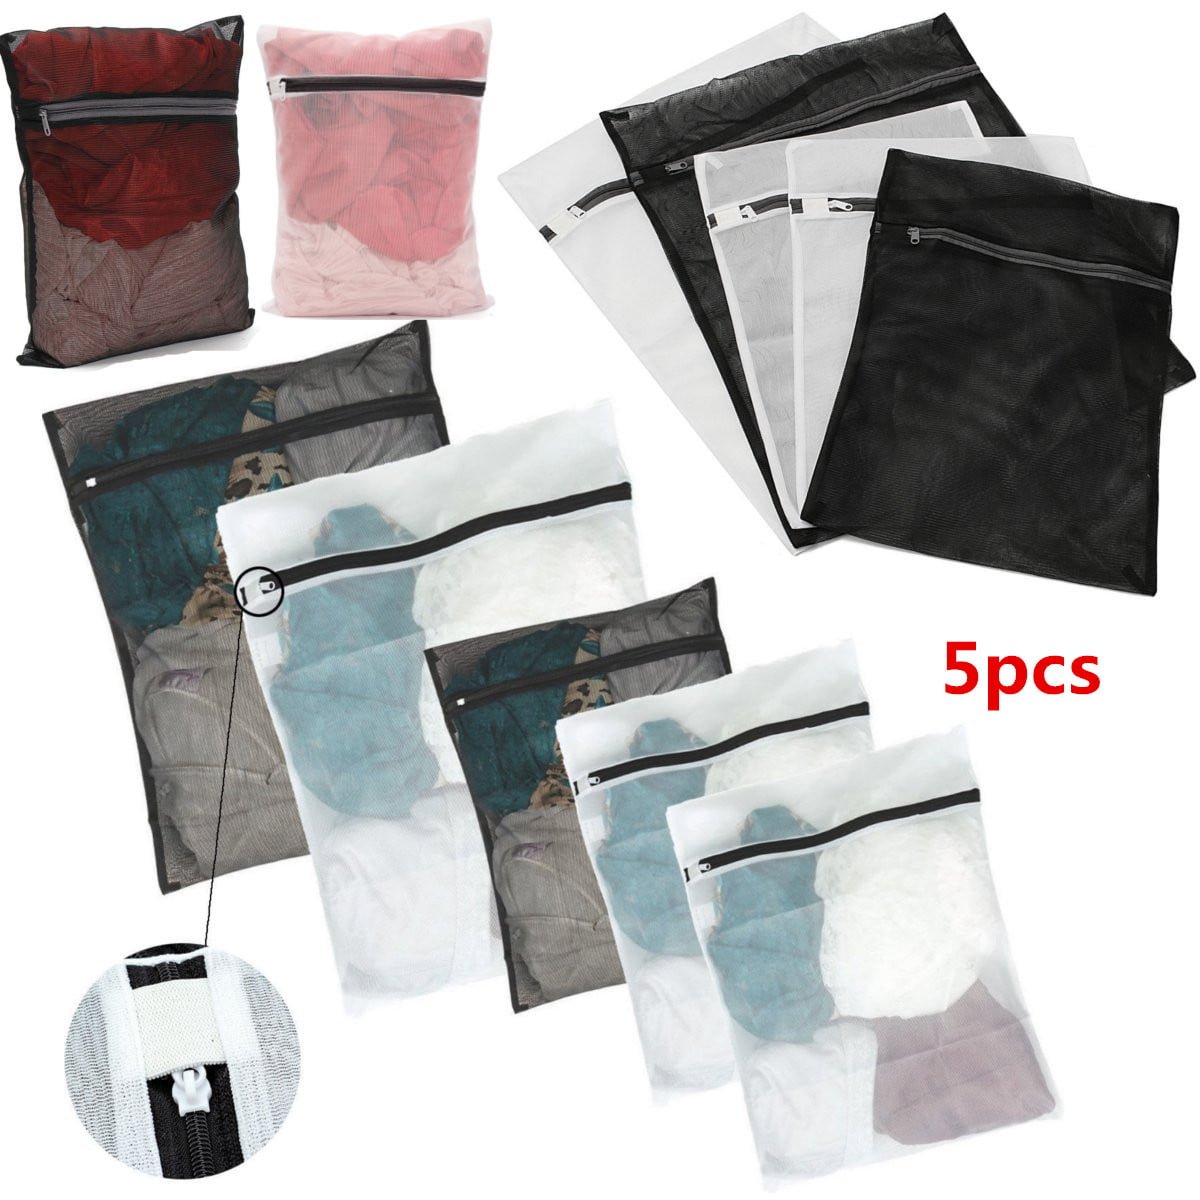 Zipper Laundry Bag Mesh Clothing Underwear Washing Bag Mesh Net Bra Aid Lingerie